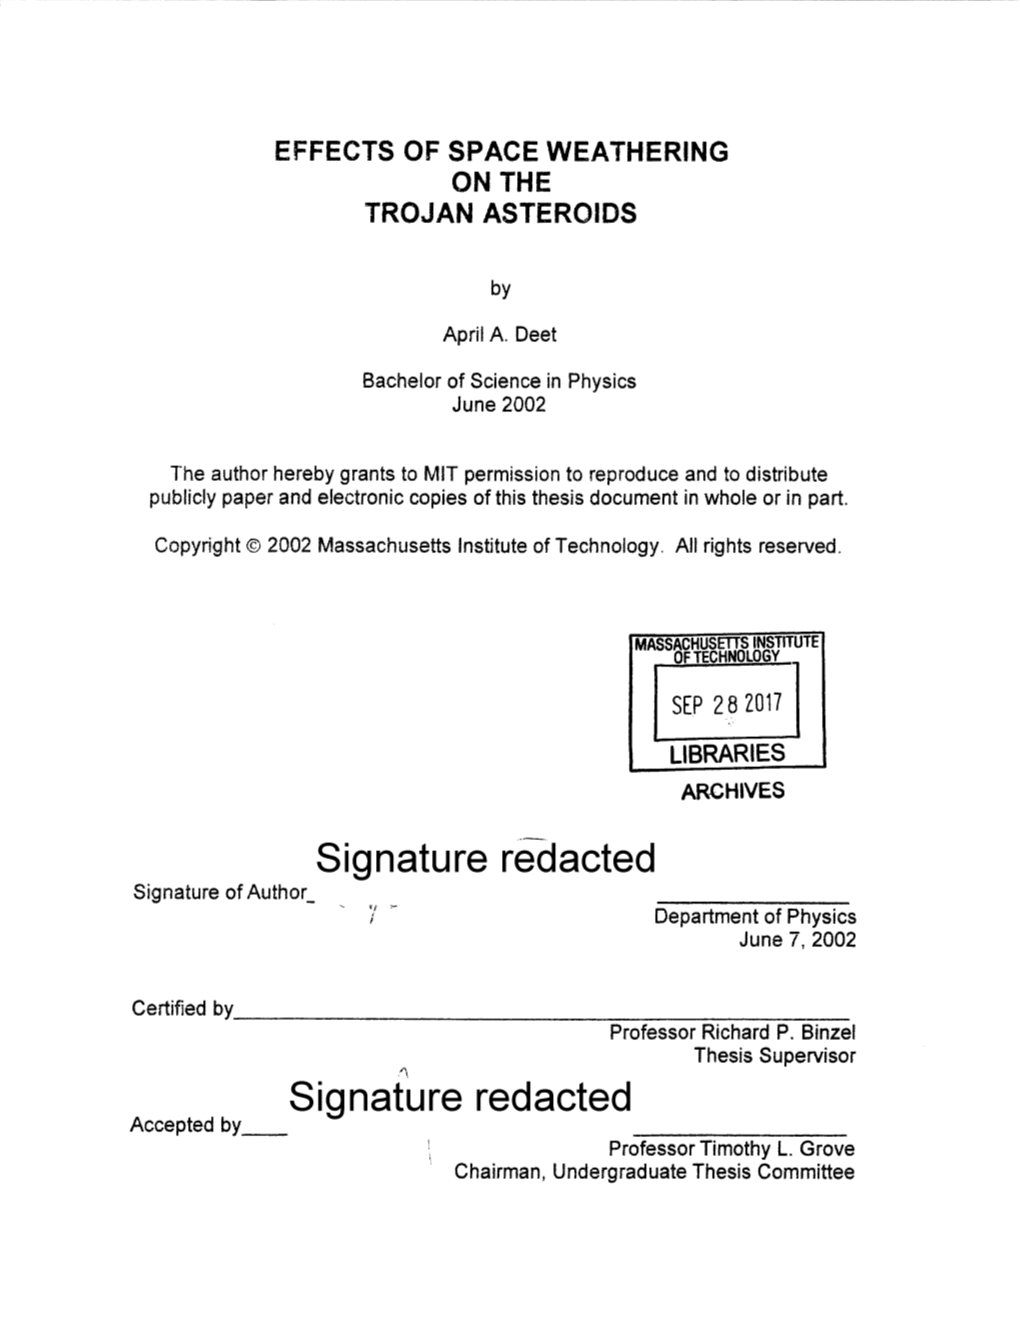 Redacted Signature of Author Department of Physics June 7, 2002